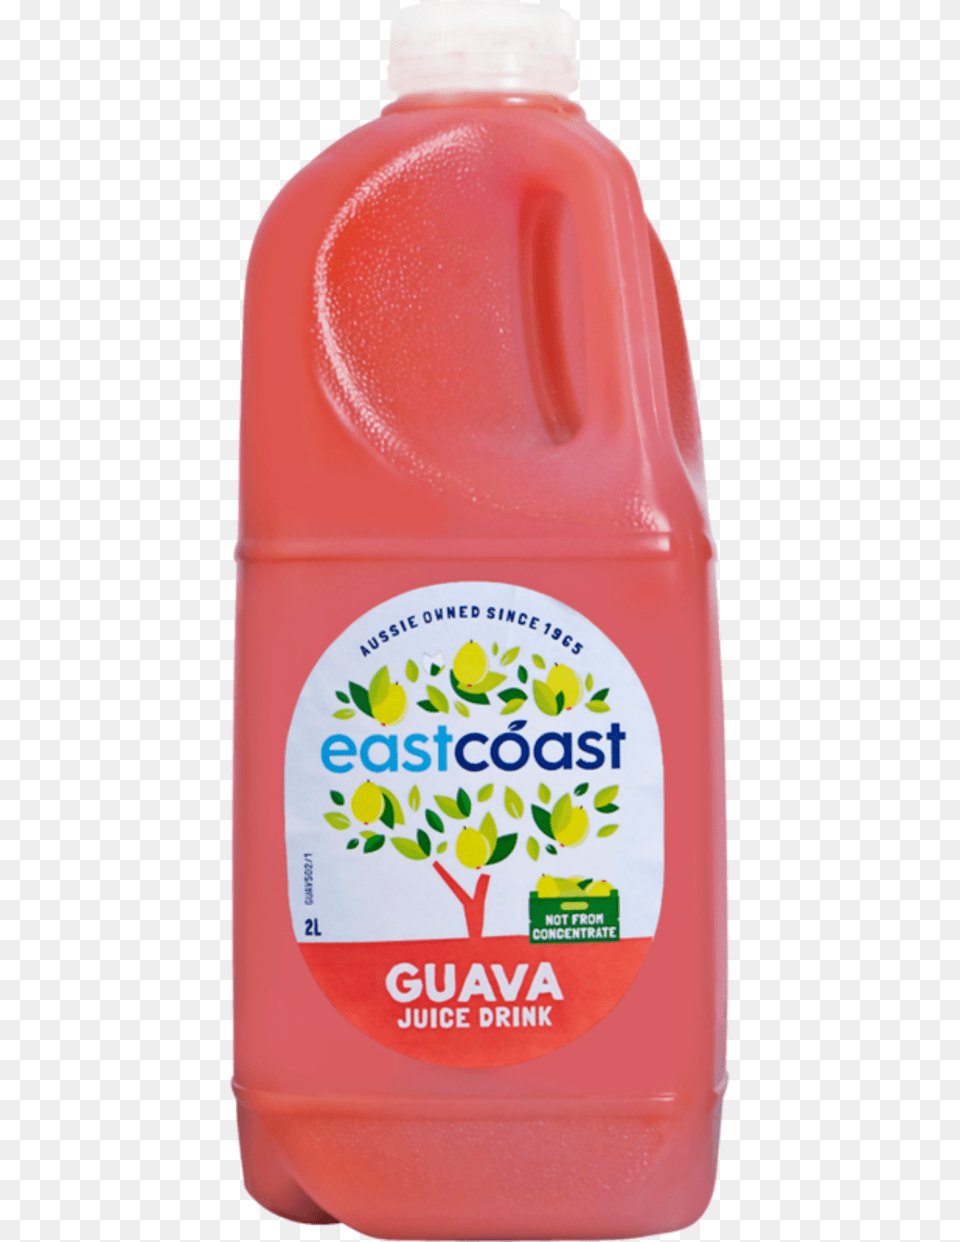 Guava Fruit Drink East Coast 2l Ruby Red Grapefruit Juice, Beverage, Food, Ketchup Free Png Download